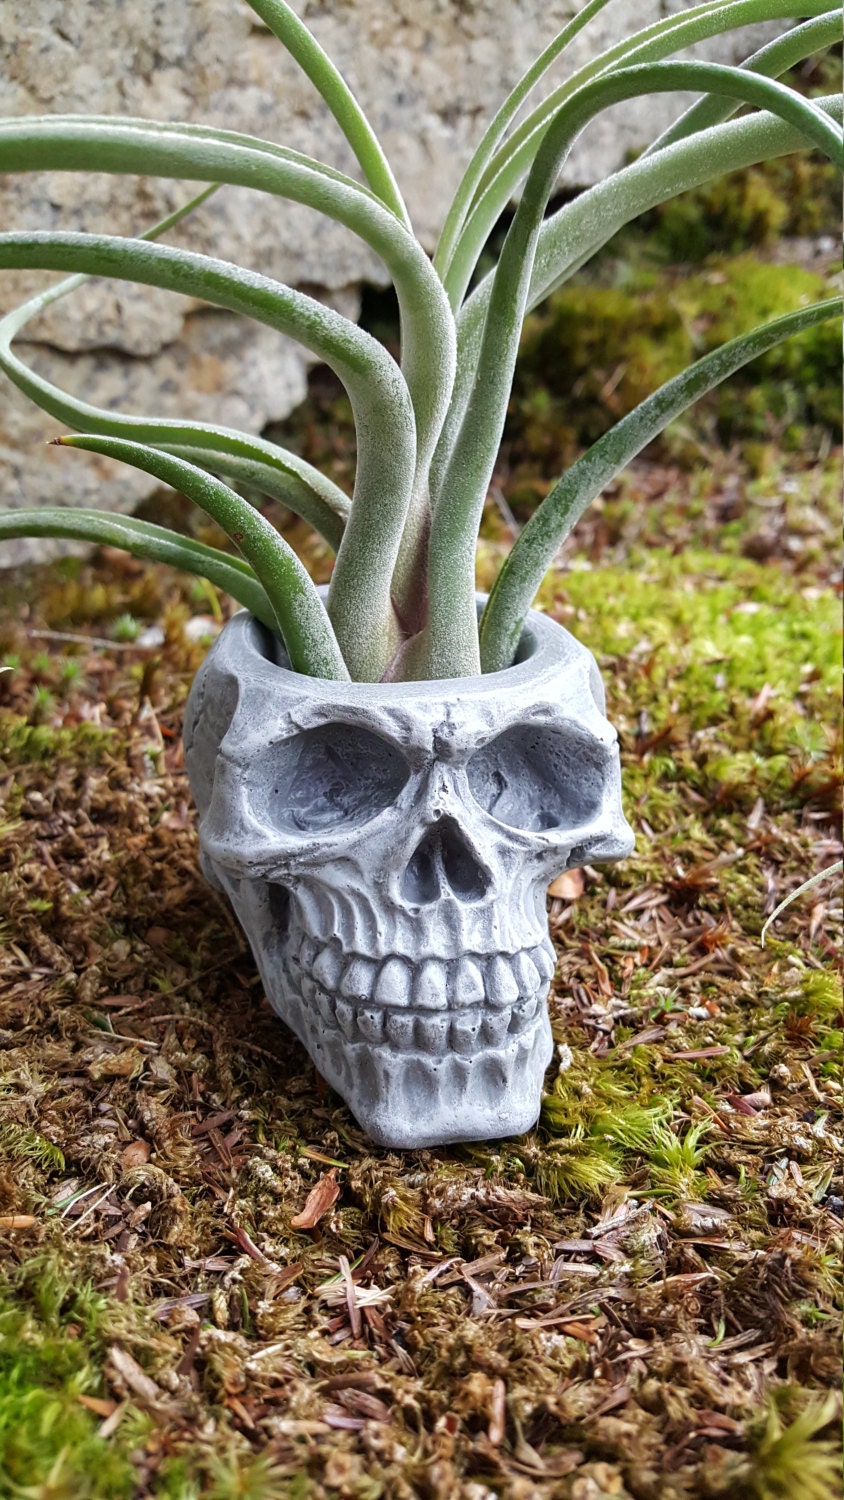  Skull  Planter  Concrete Human Skull  Plant Pot  by FireKDesigns